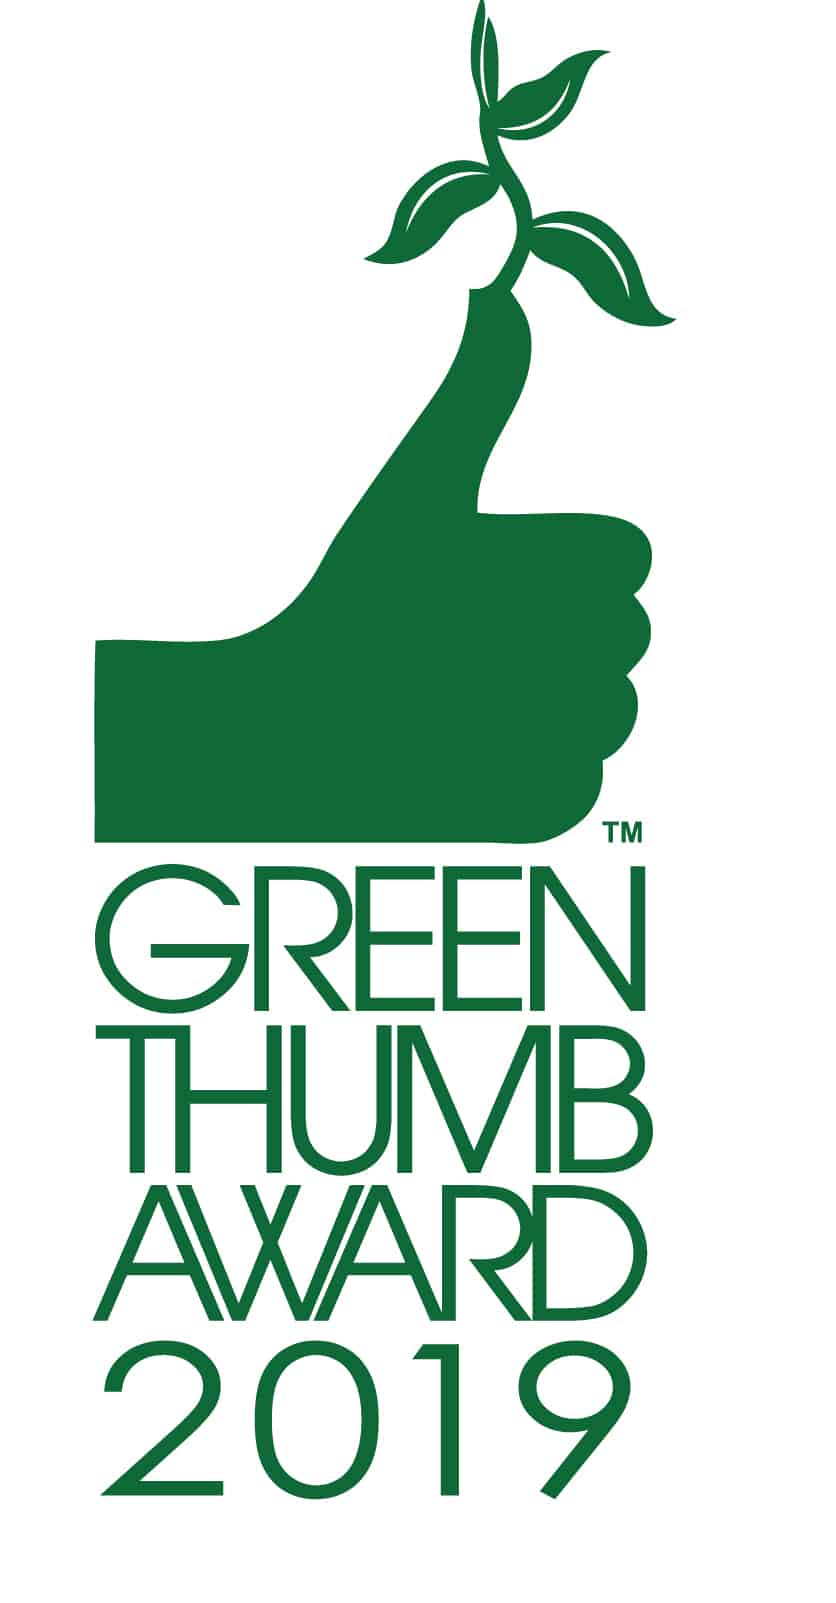 2019 Green Thumb Awards logo